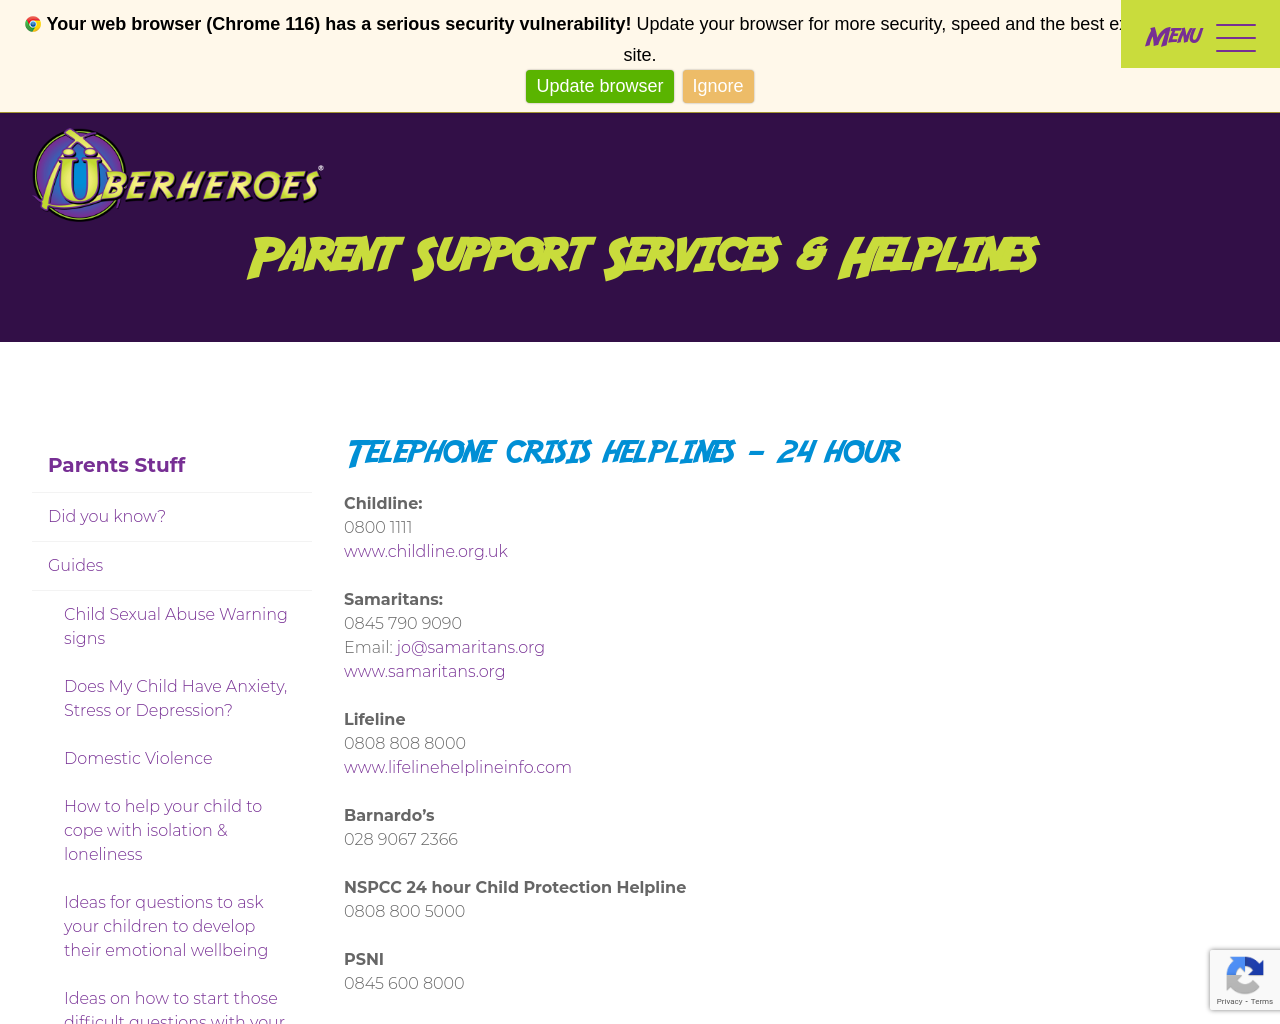 Parent Support Services & Helplines